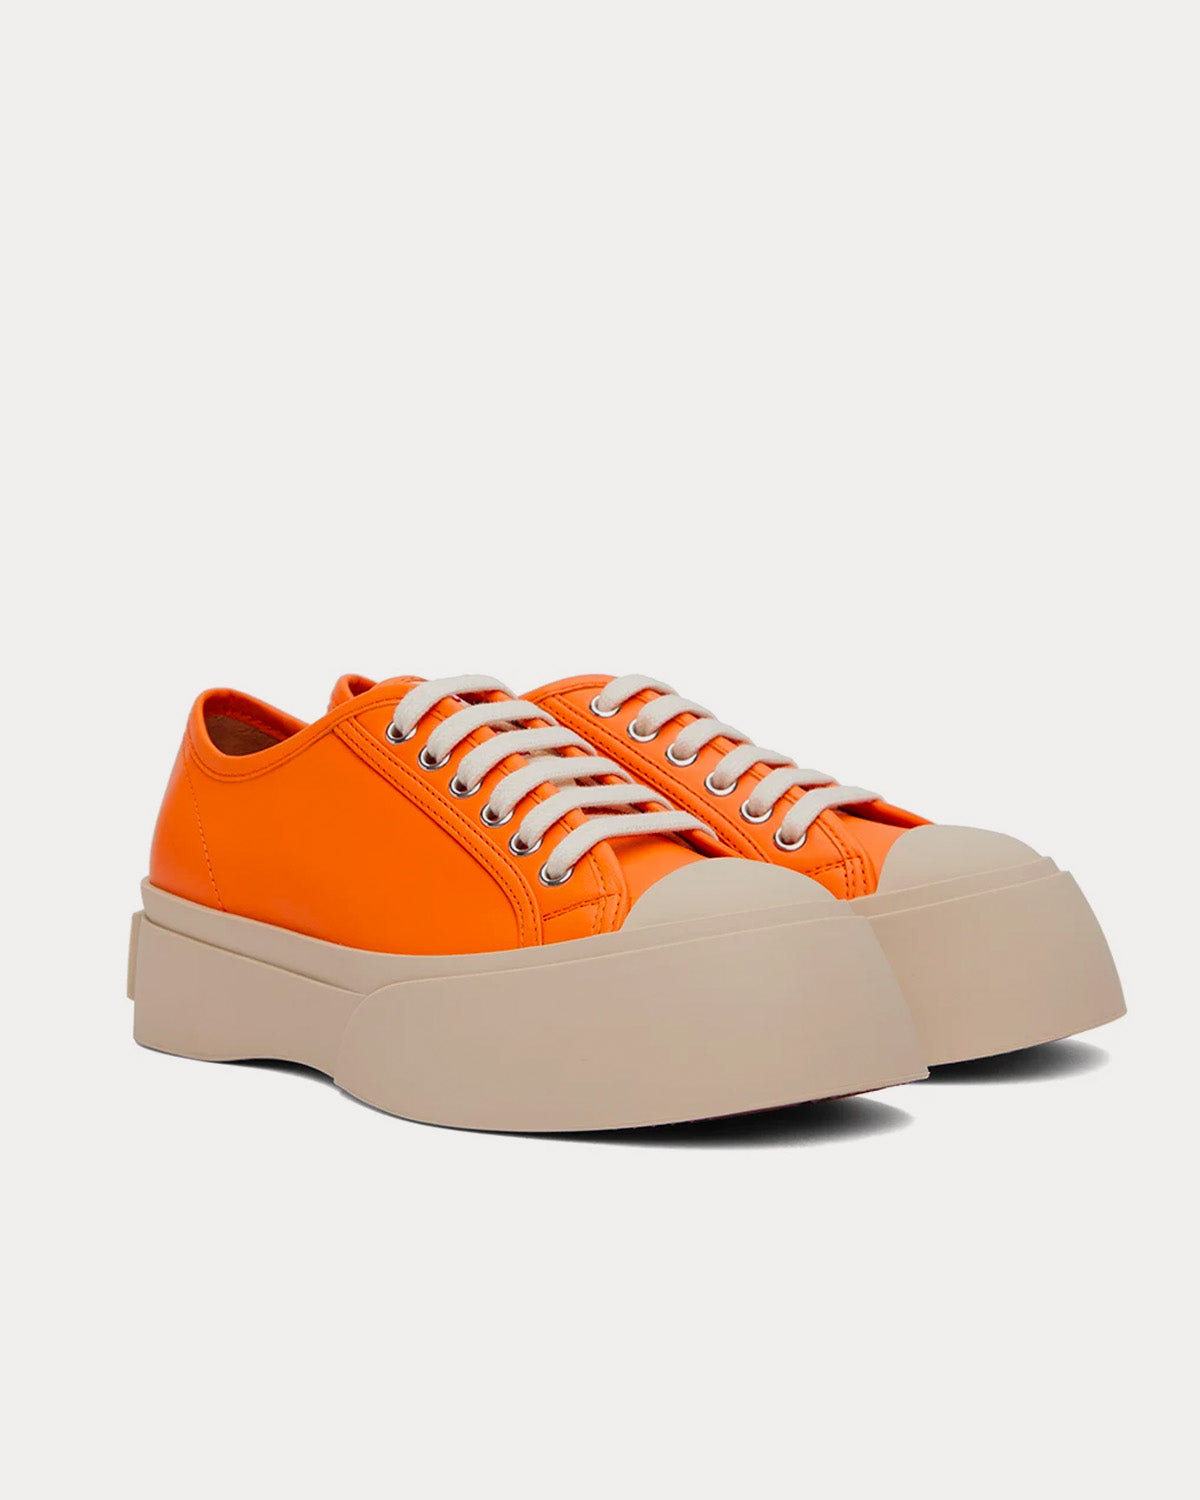 Marni - Pablo Leather Orange Low Top Sneakers